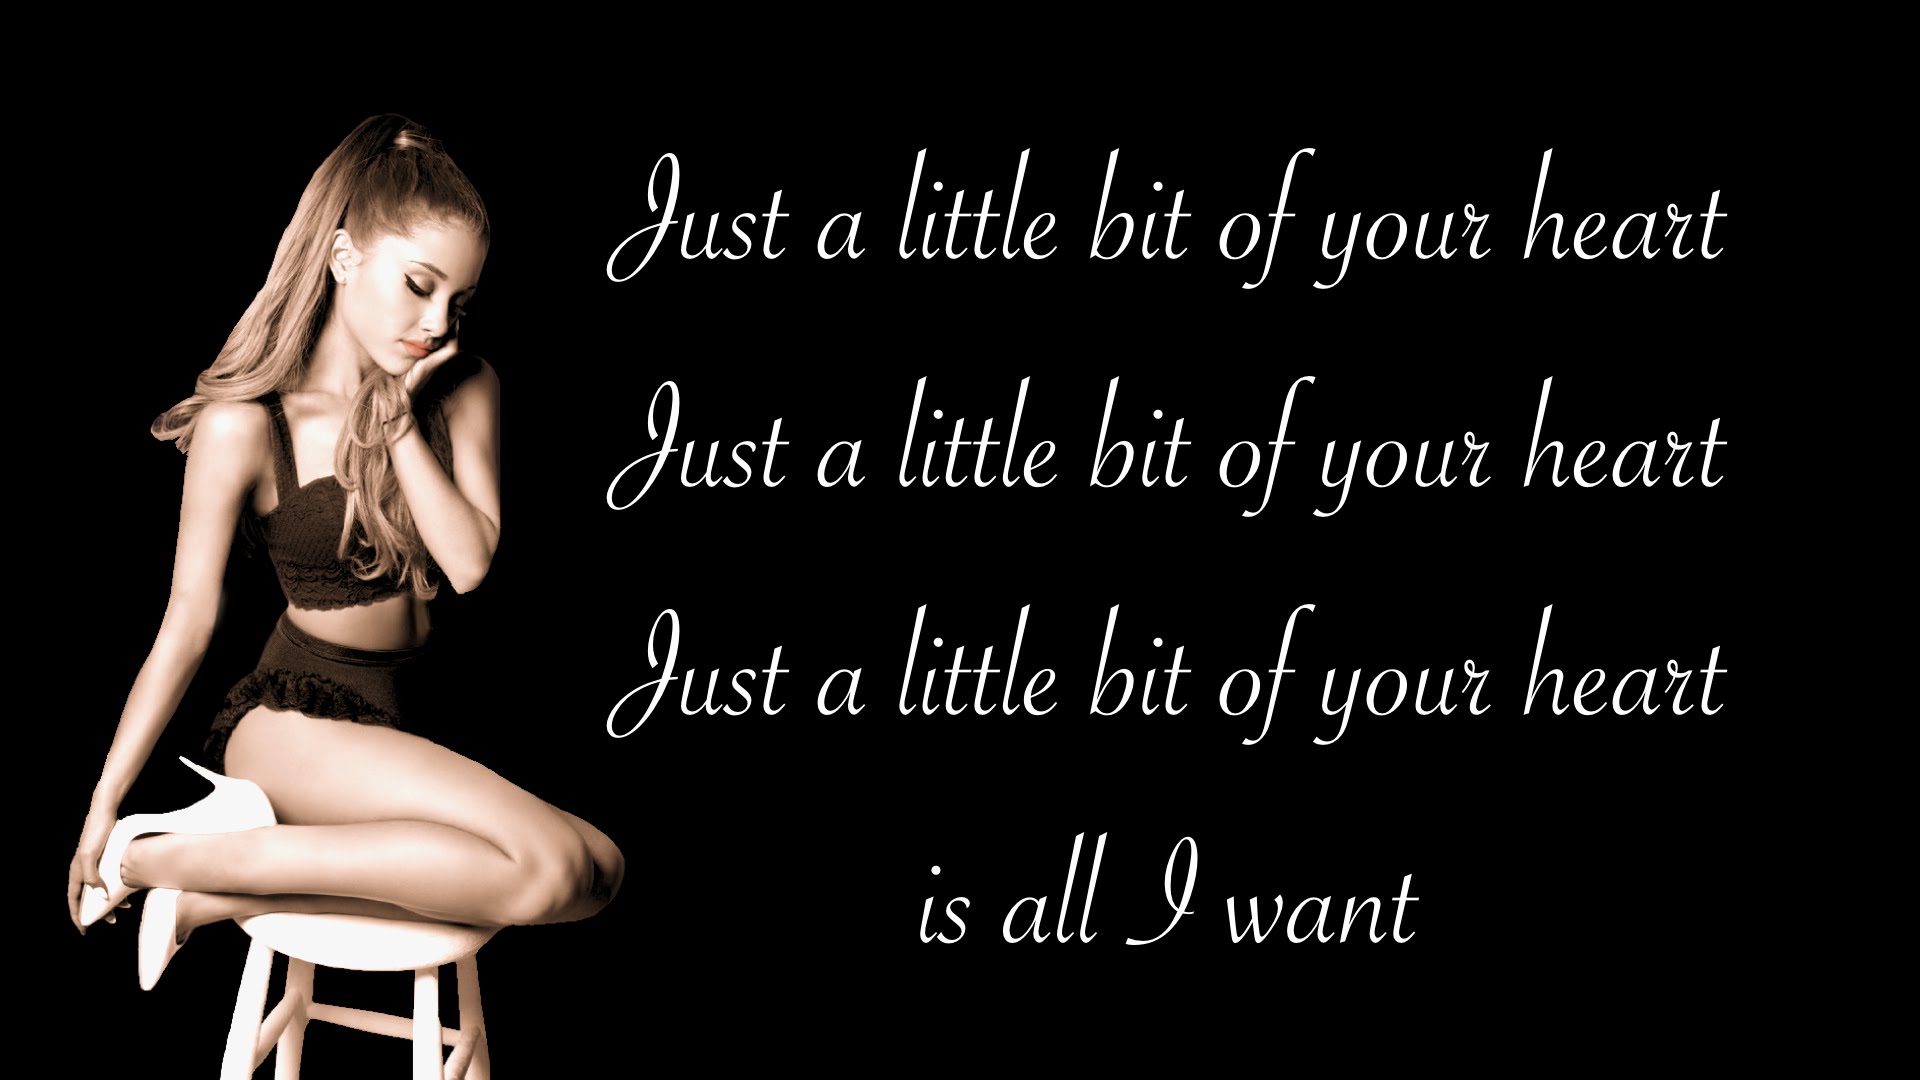 Ariana Grande - Just a Little Bit of Your Heart (Lyrics) - YouTube